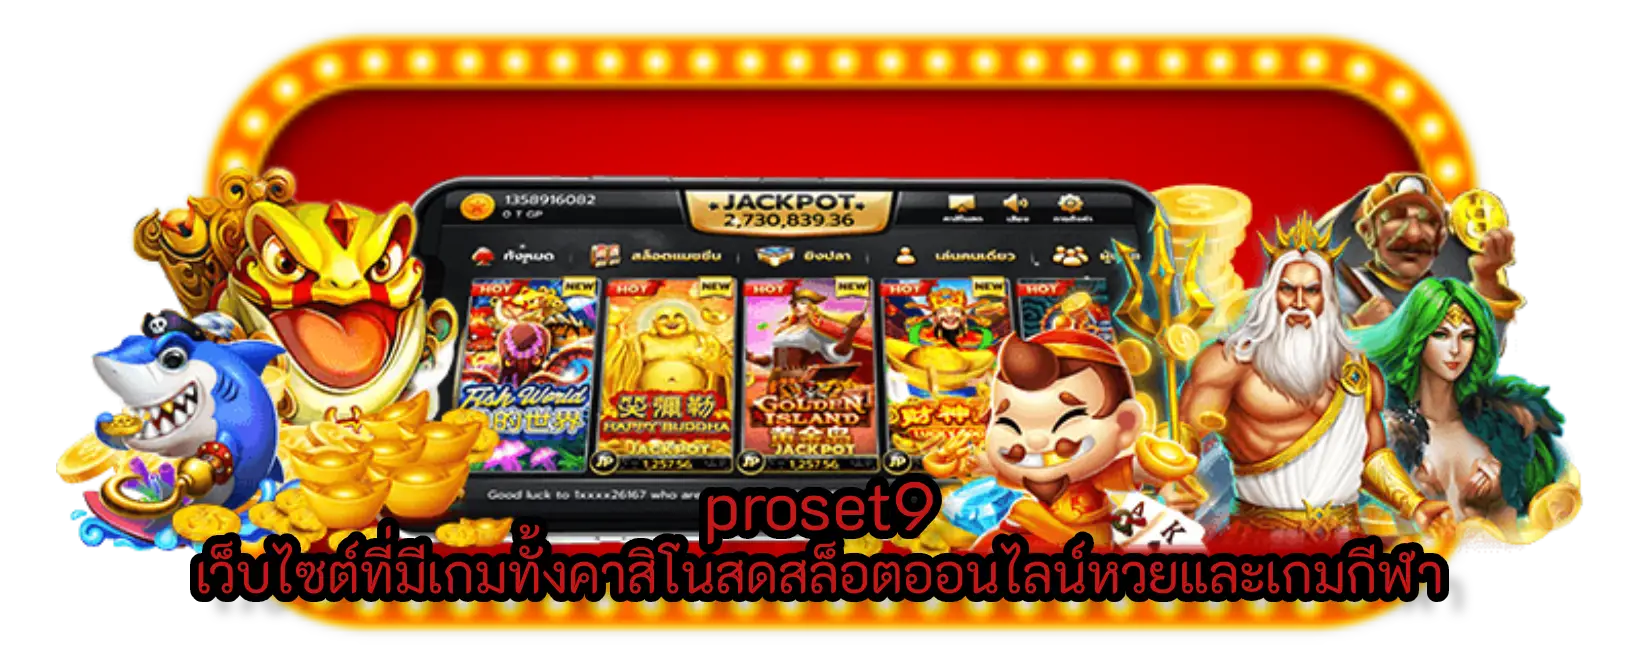 proset9 เว็บไซต์ที่มีเกมทั้งคาสิโนสดสล็อตออนไลน์หวยและเกมกีฬา